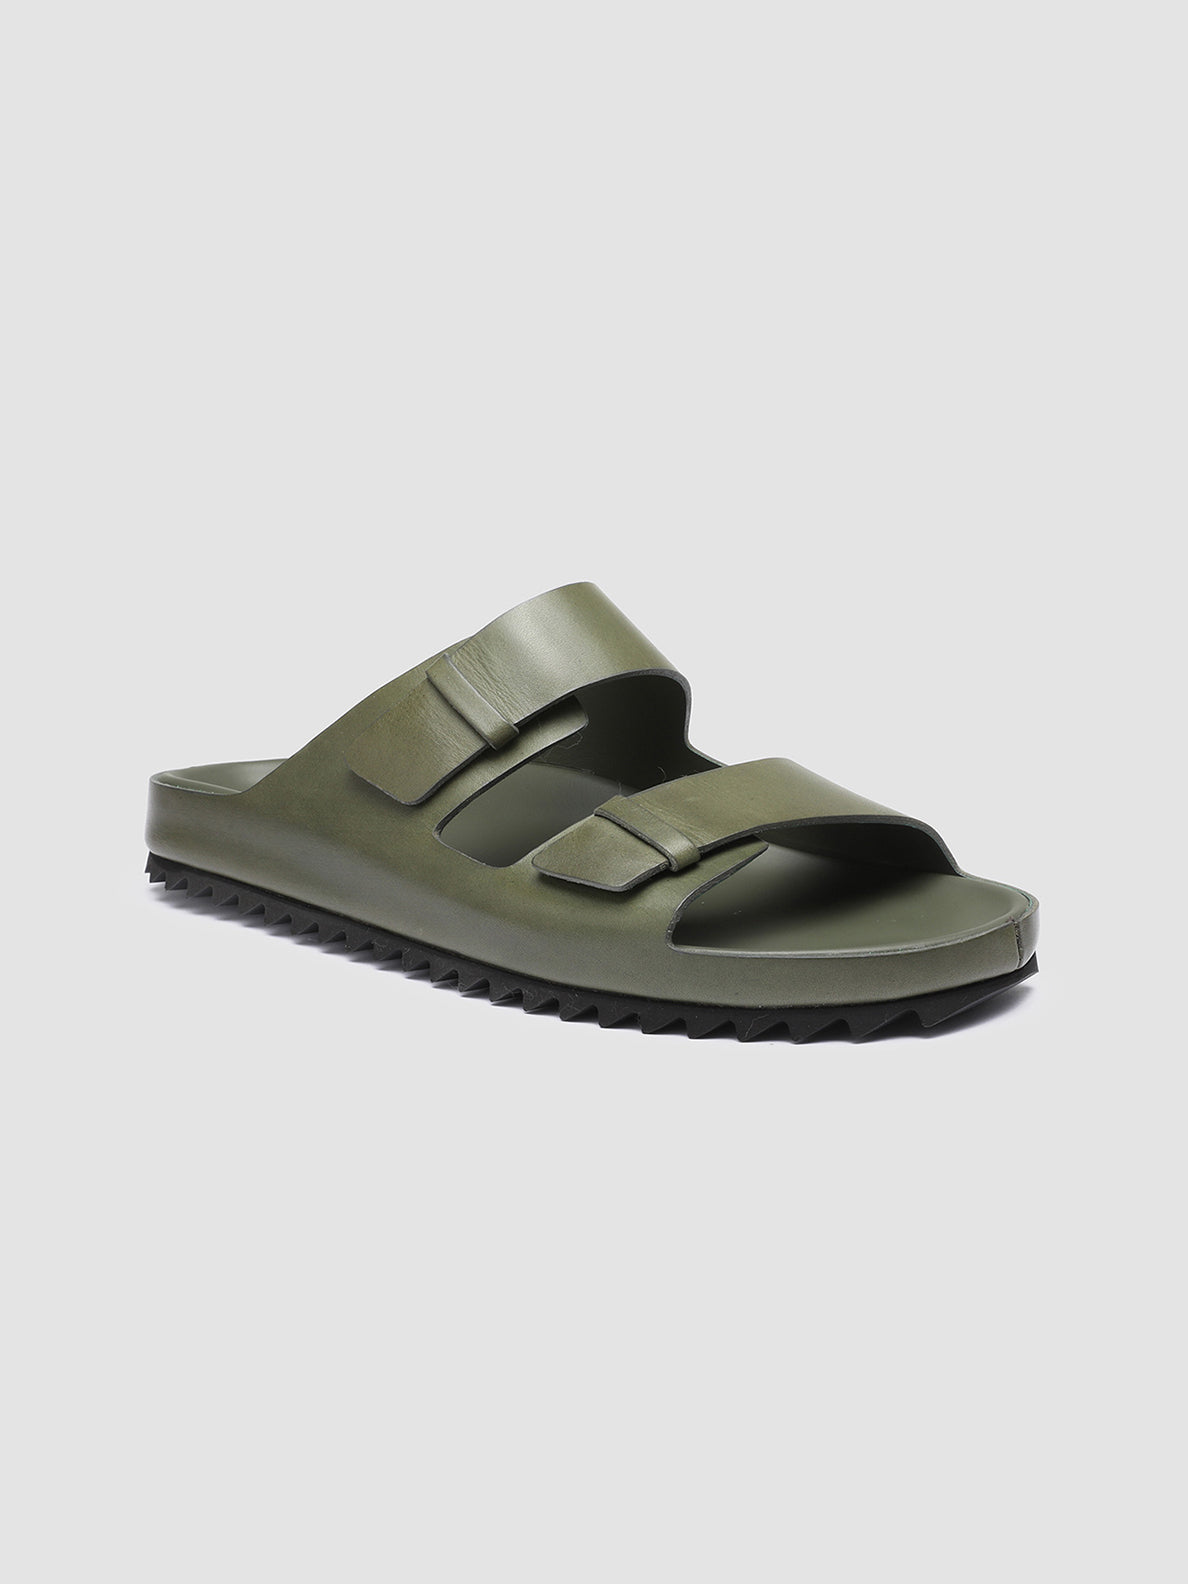 Men's Green Leather sandals: AGORÀ 002